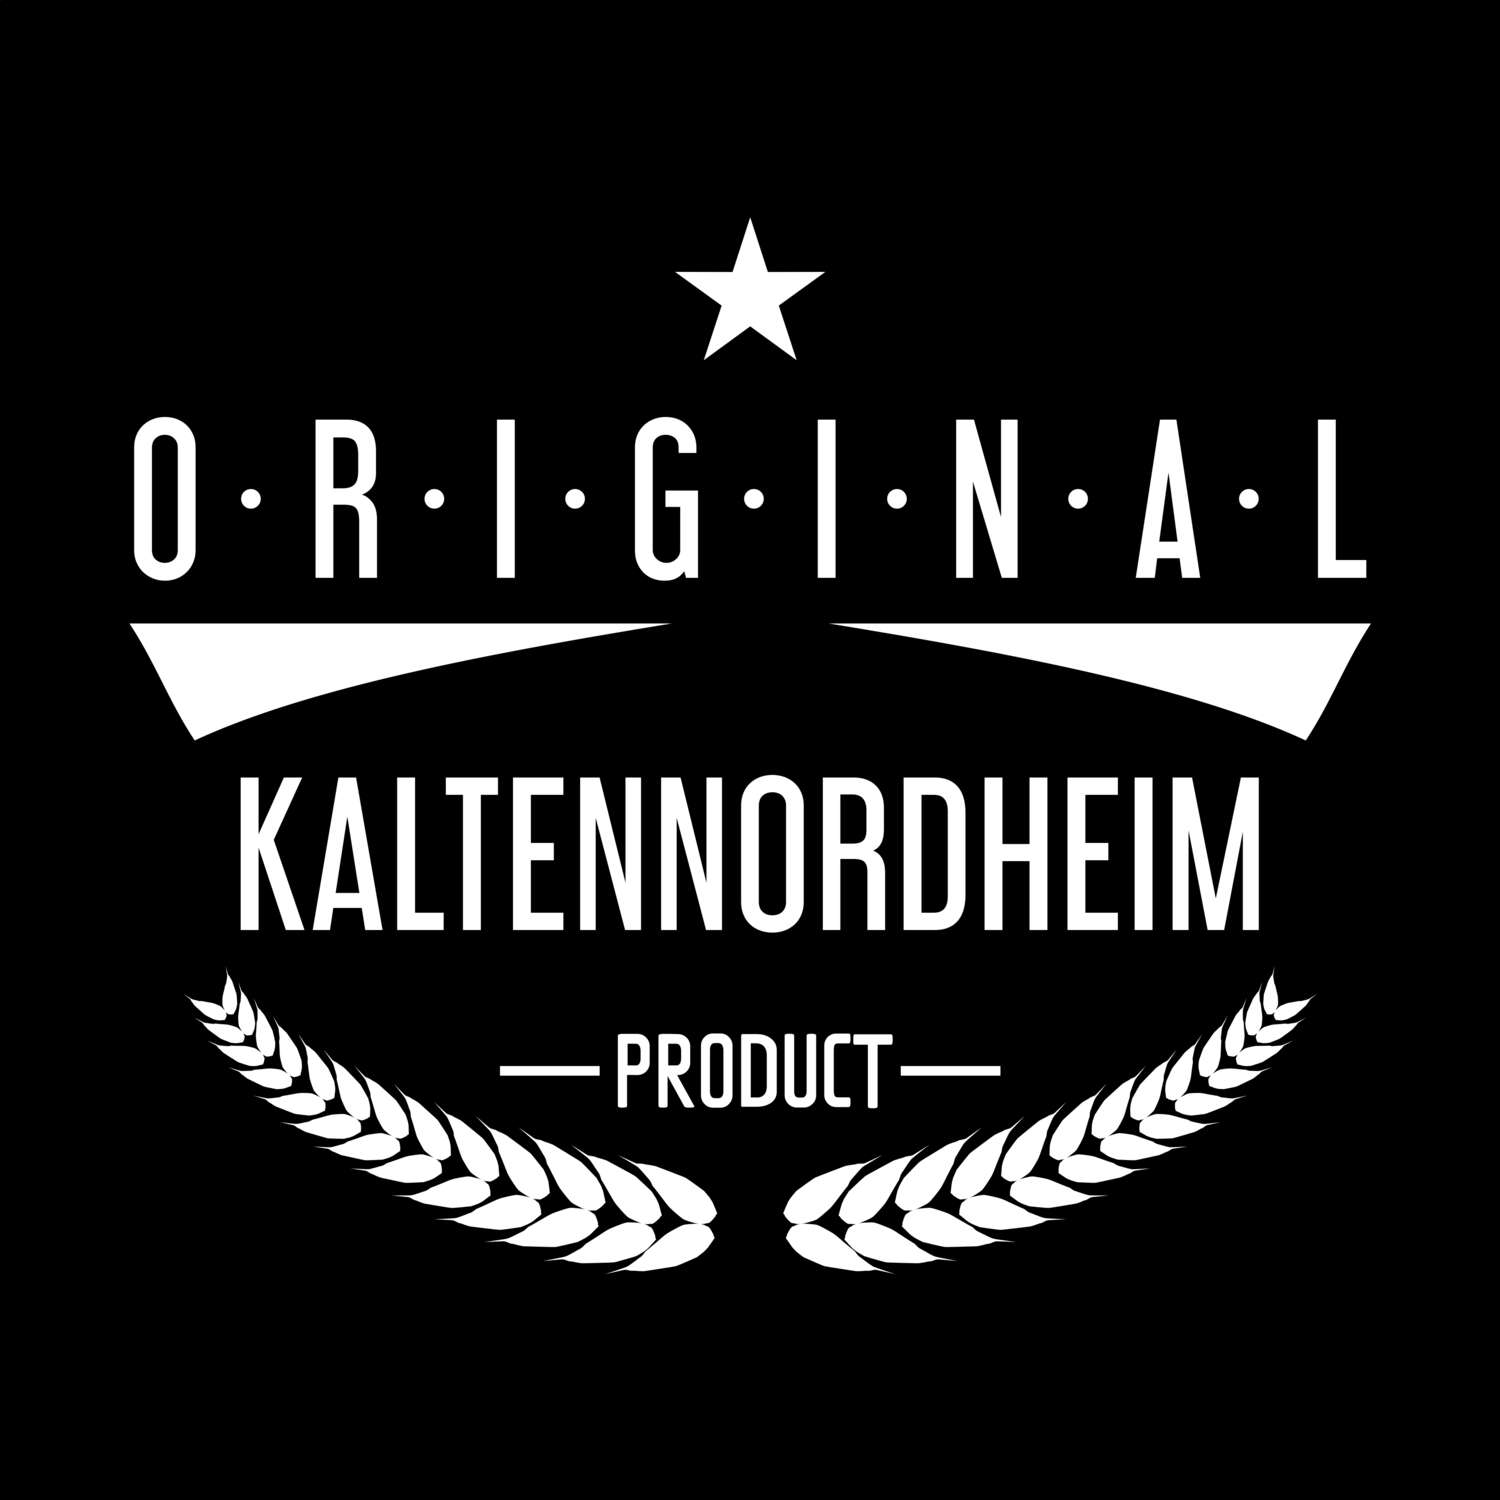 Kaltennordheim T-Shirt »Original Product«